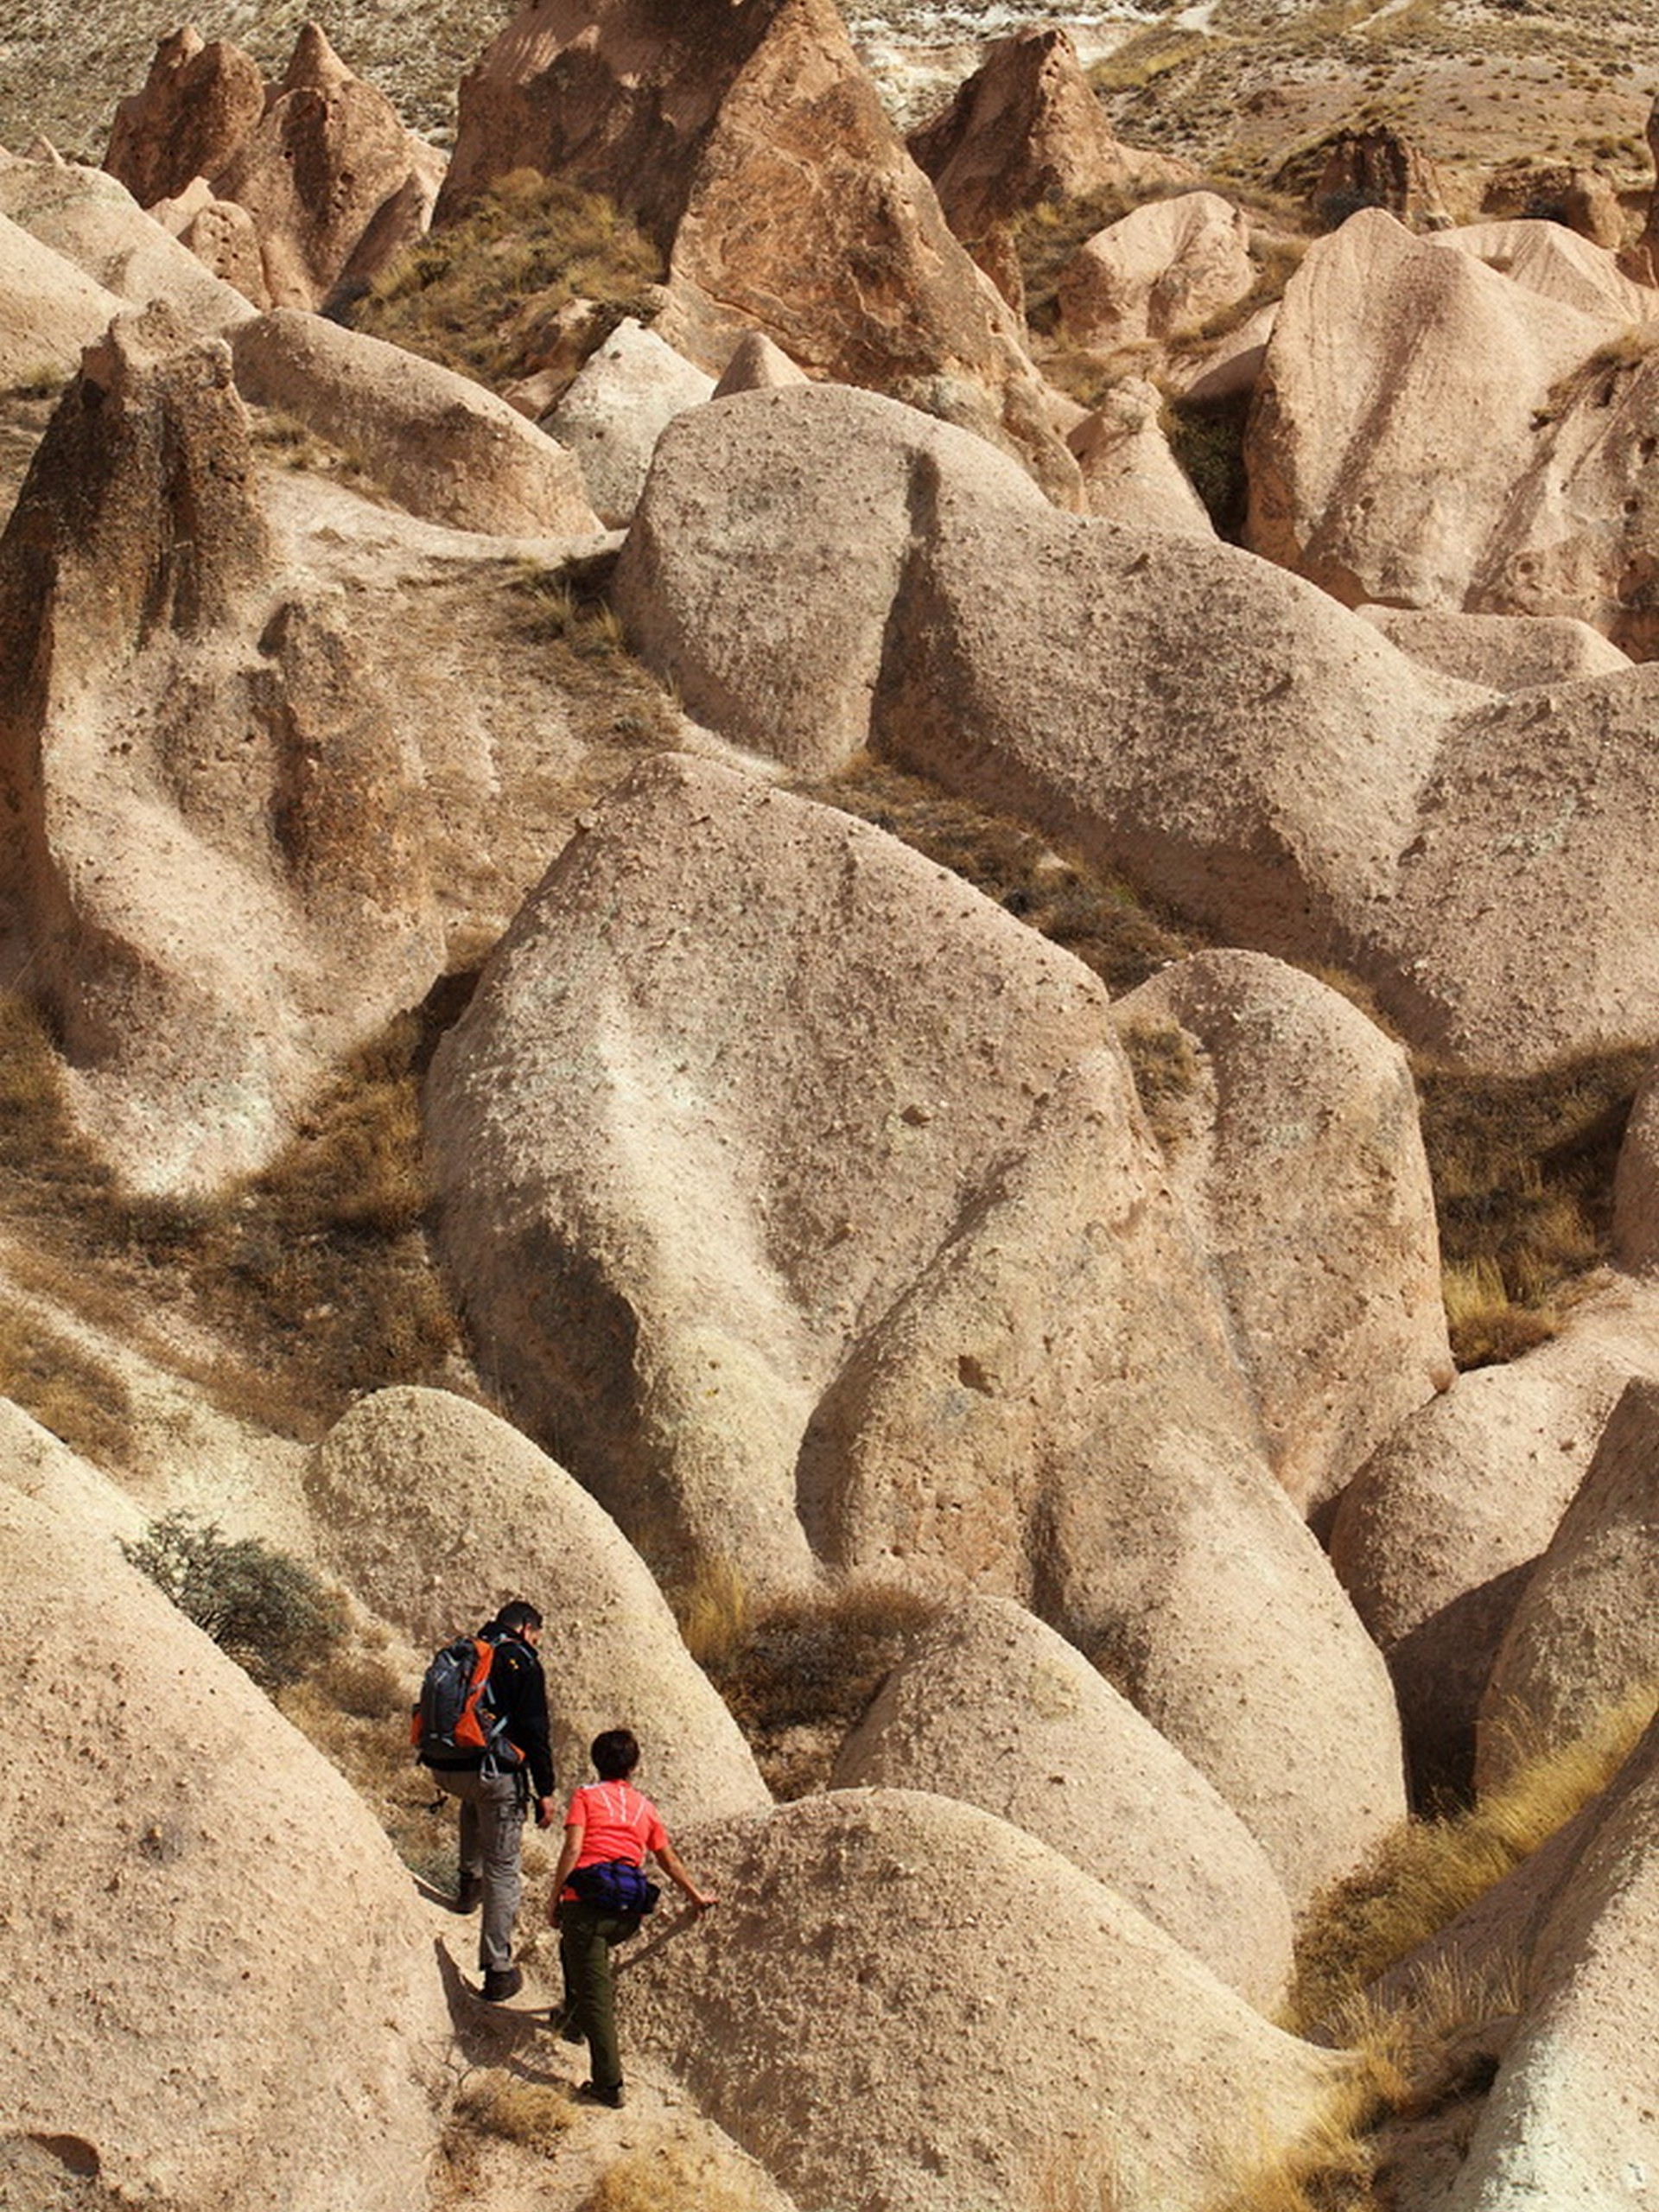 On the rocks of Cappadocia in Turkey